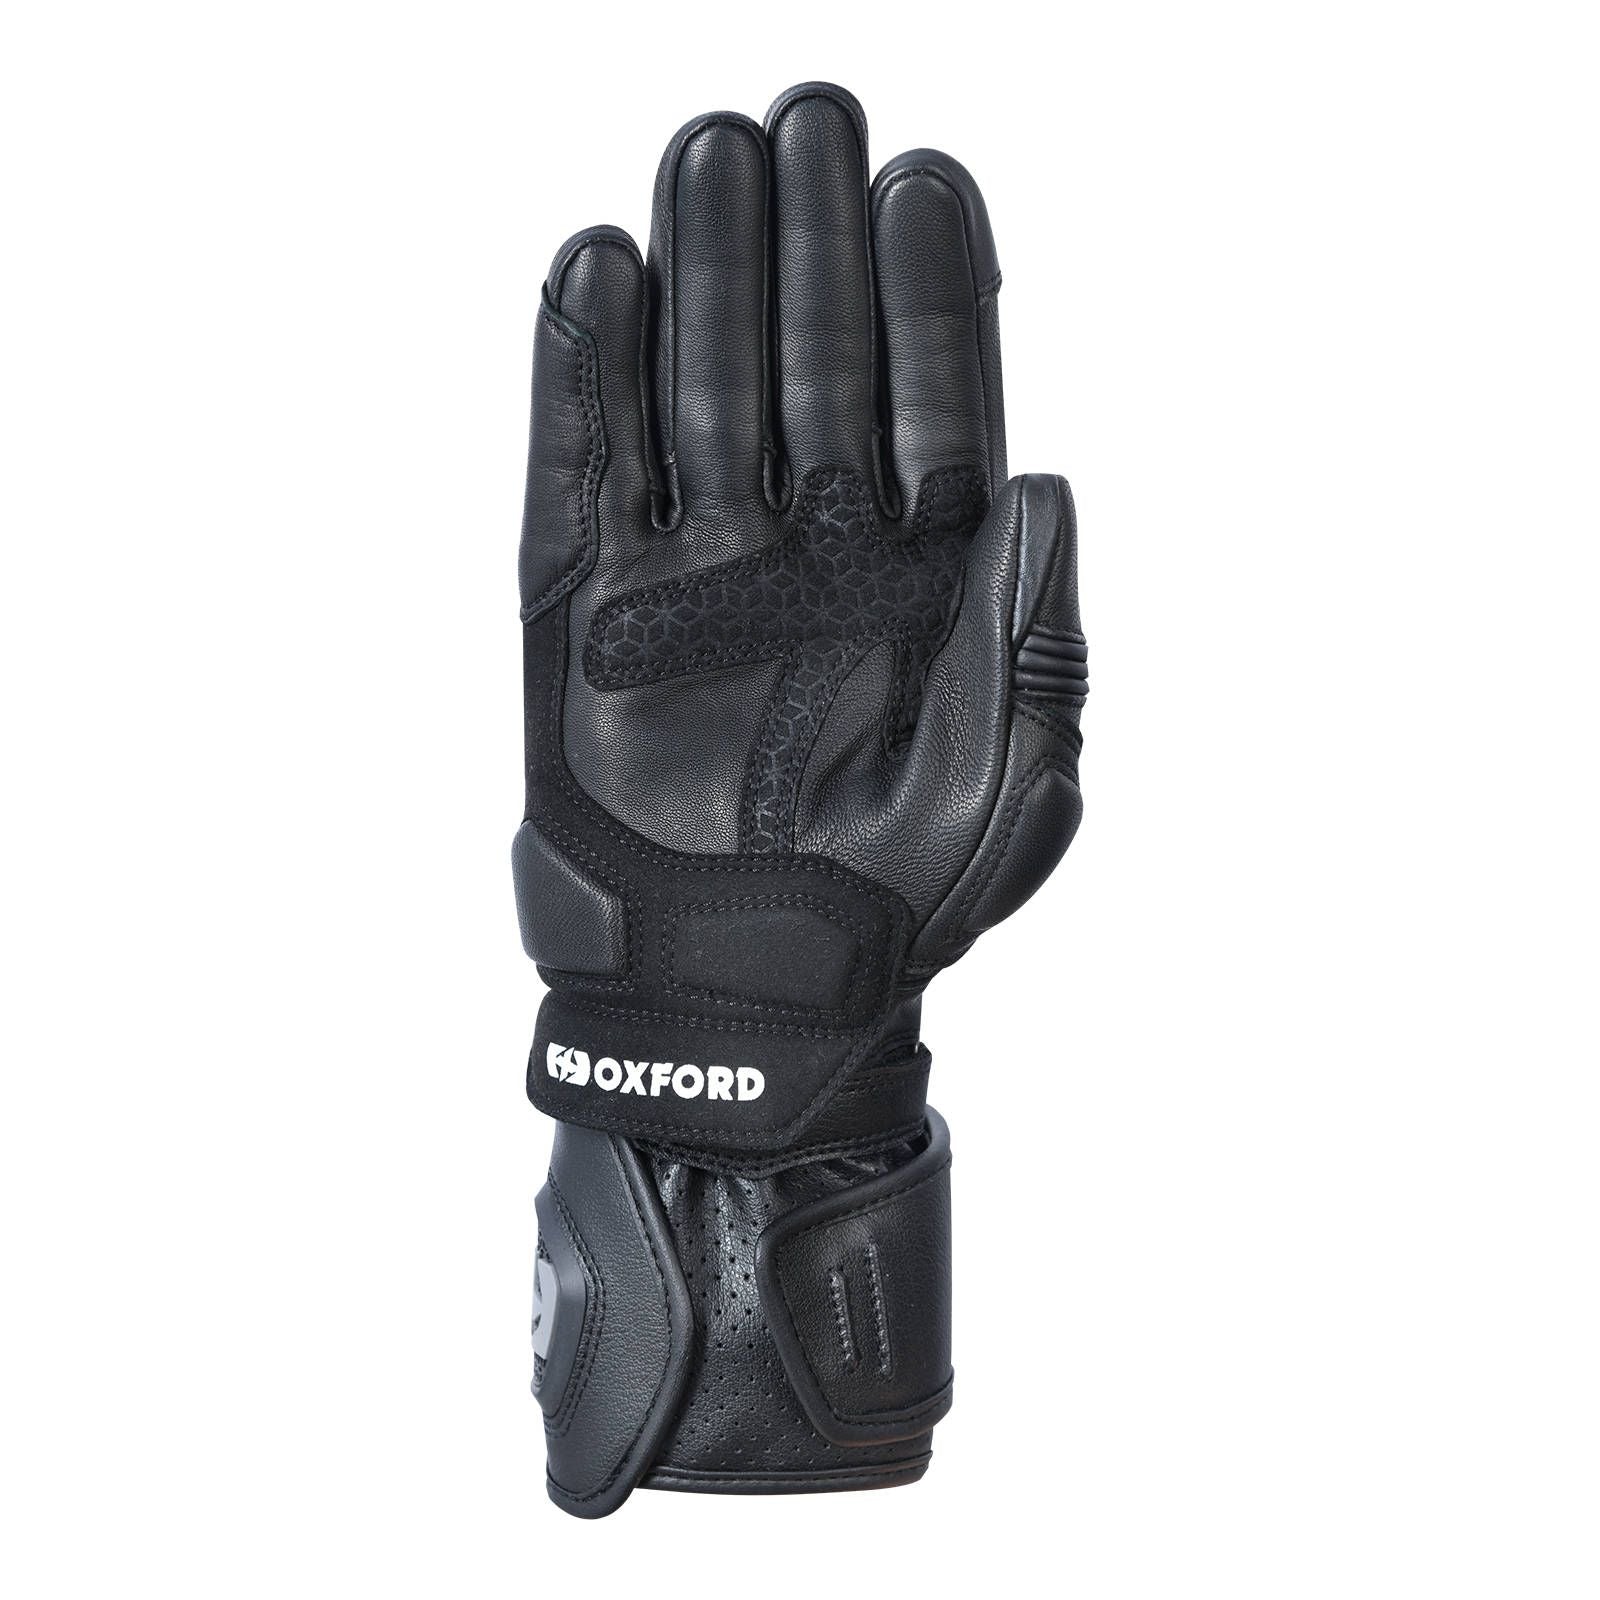 New OXFORD RP-2R Leather Sport Glove - Tech Black (L) #OXGM193301L